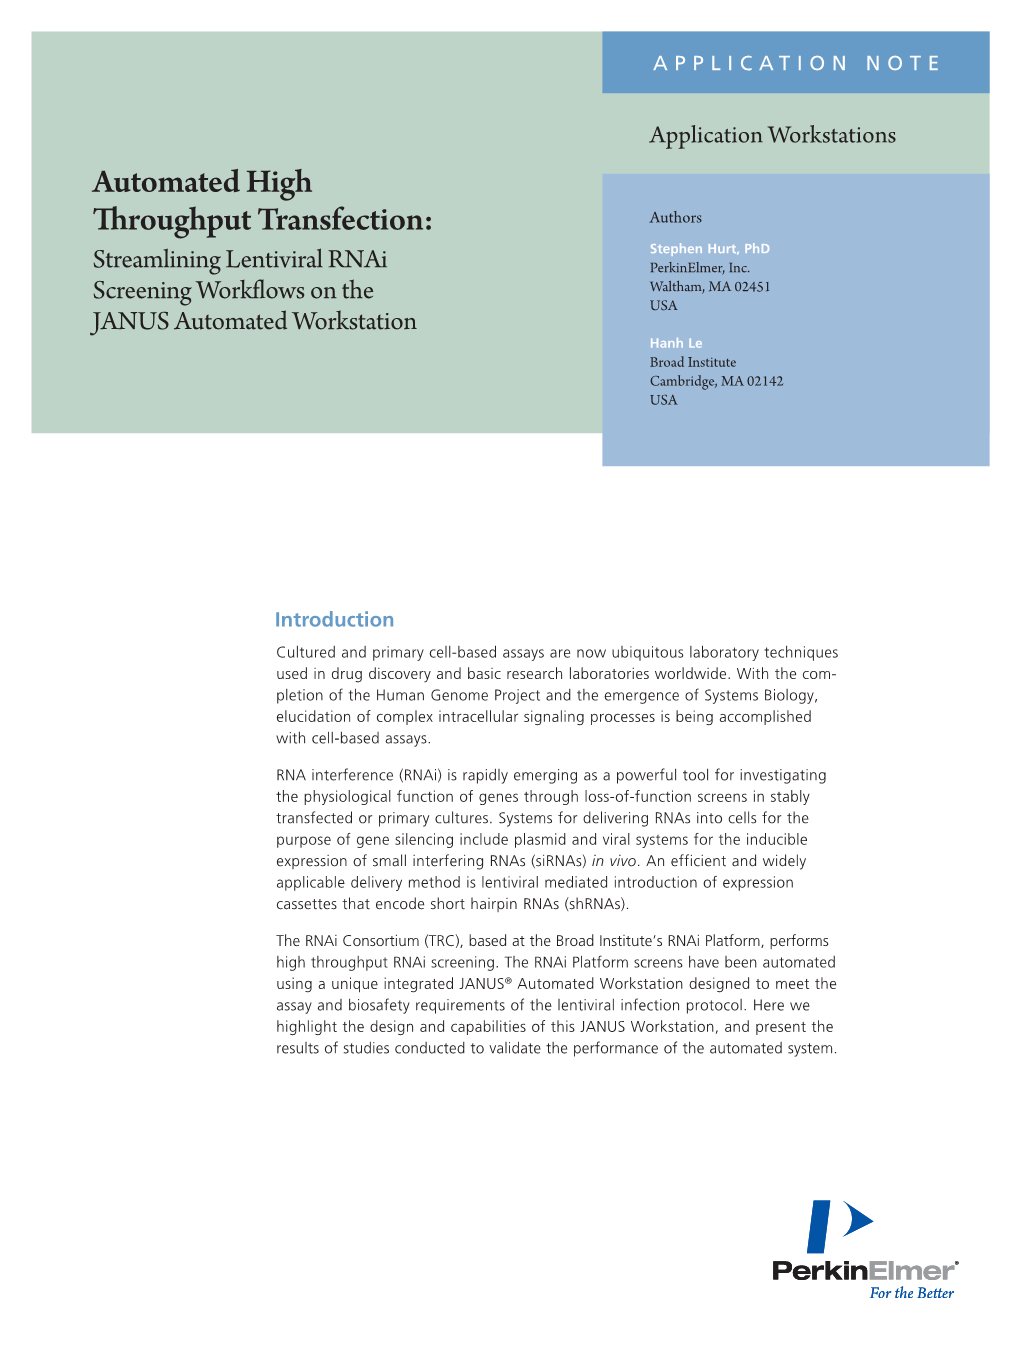 Automated High Throughput Transfection: Authors Stephen Hurt, Phd Streamlining Lentiviral Rnai Perkinelmer, Inc